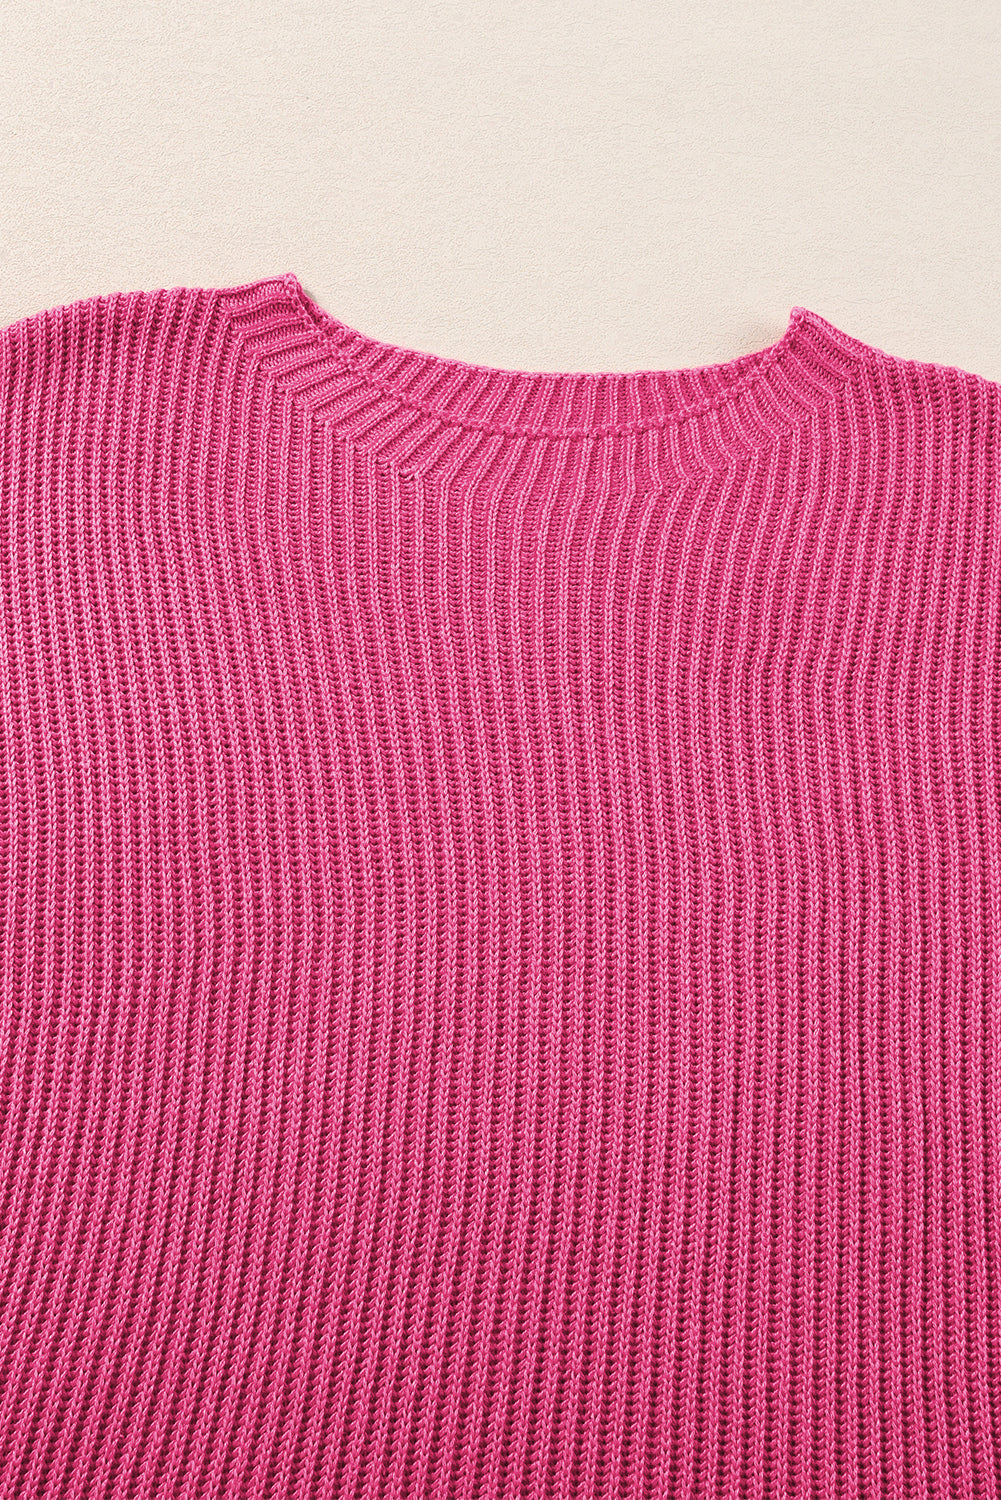 Rose Red Short Sleeve Side Slit Oversized Sweater